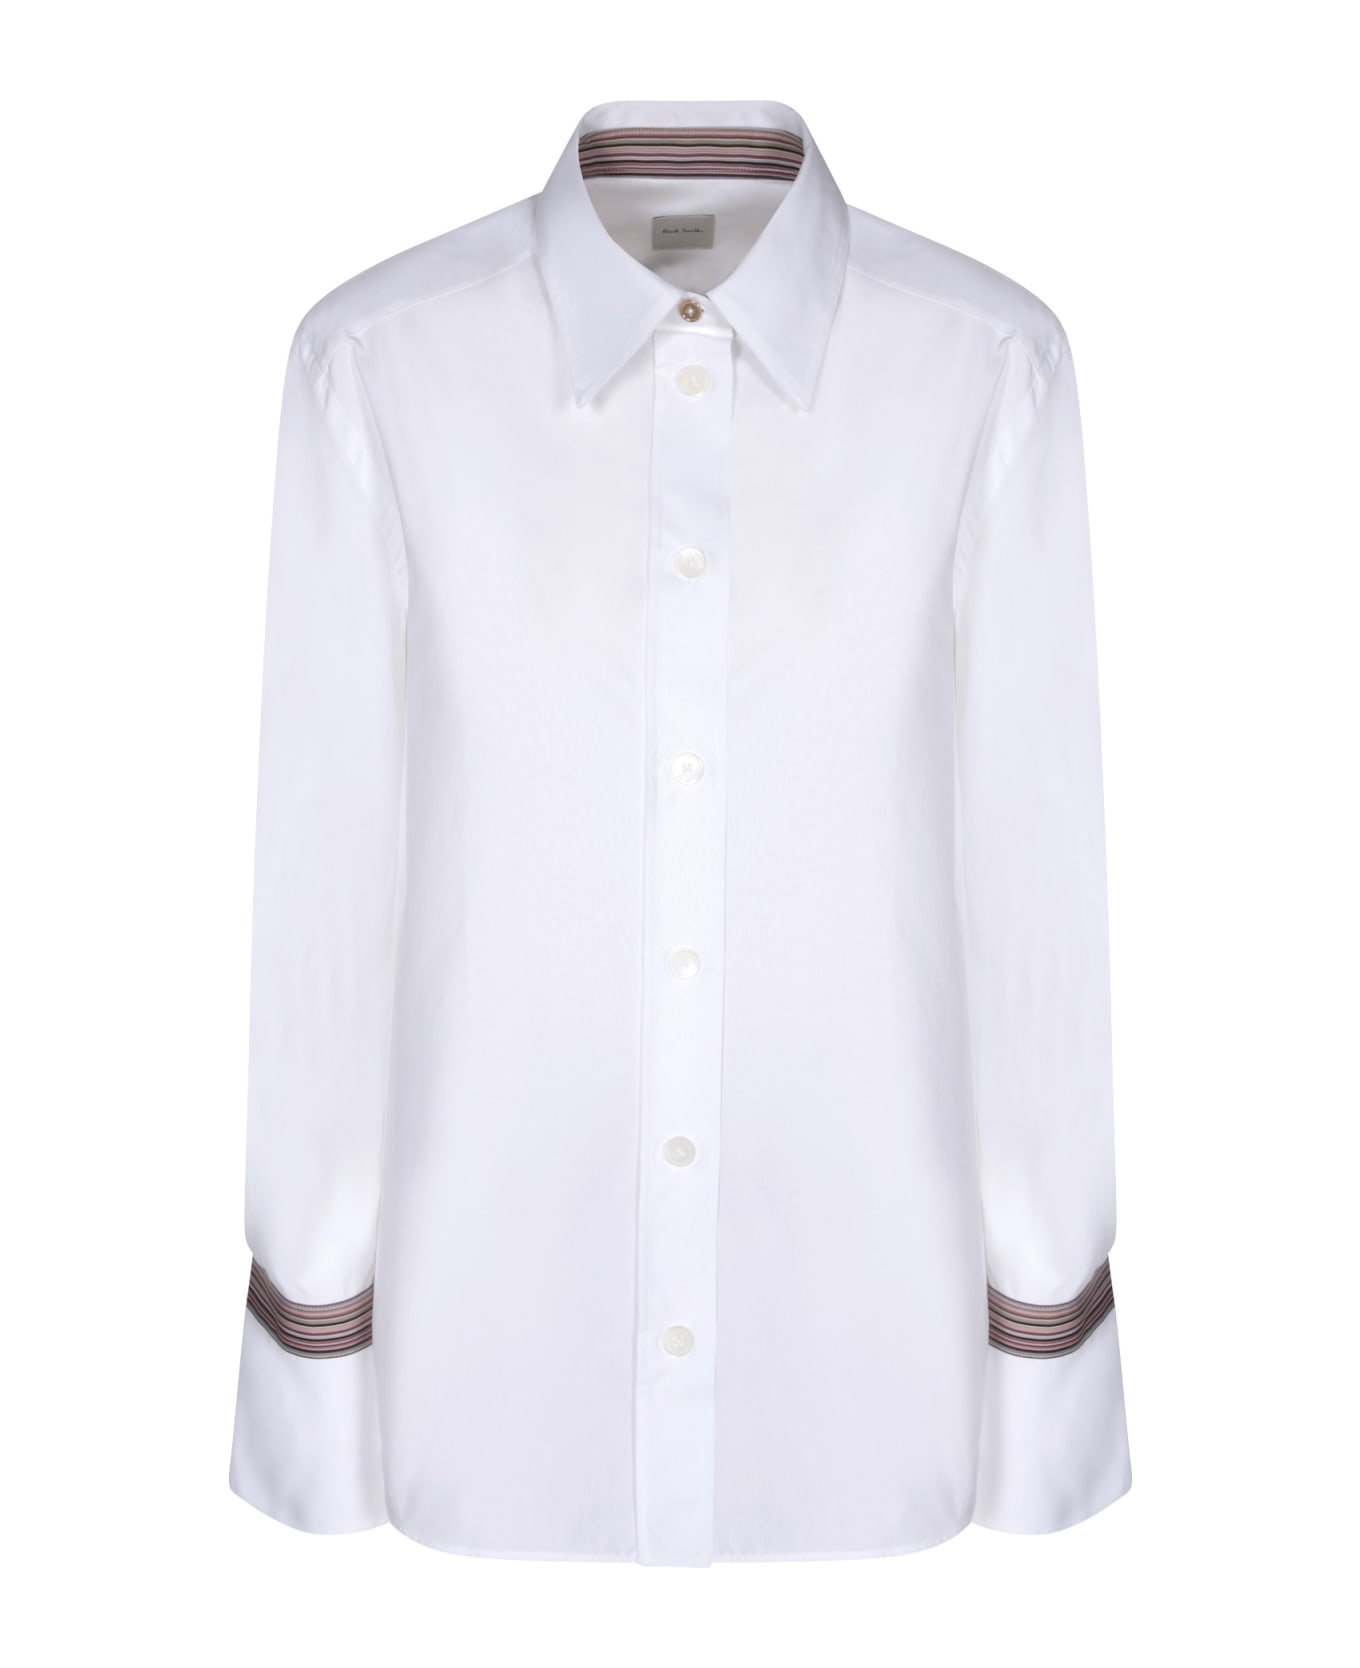 Paul Smith Popeline White Shirt - White